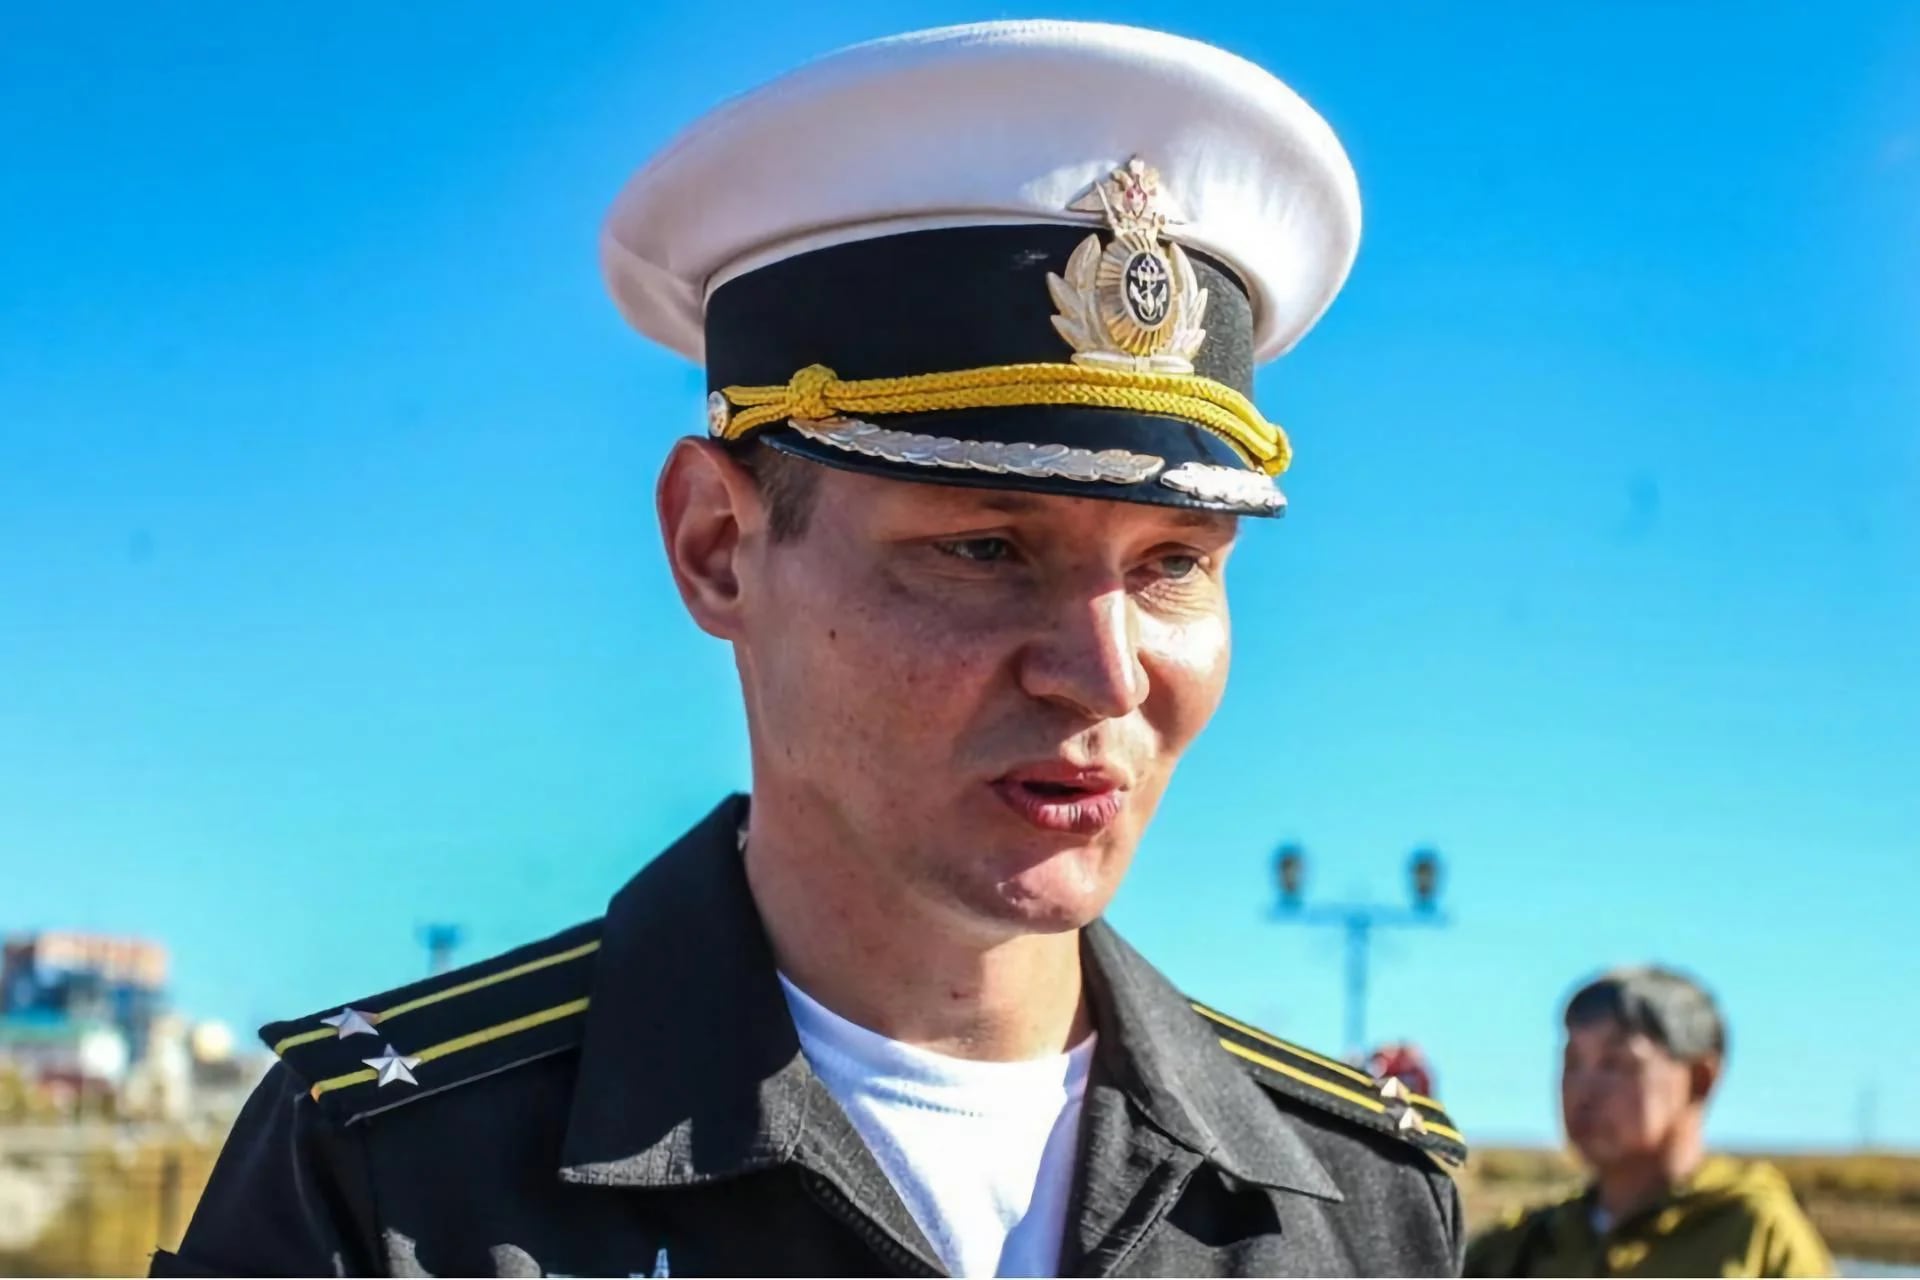 Medios ucranianos especularon que Rzhitsky estaba a bordo del submarino que lanzó misiles contra la ciudad de Vinnytsia.